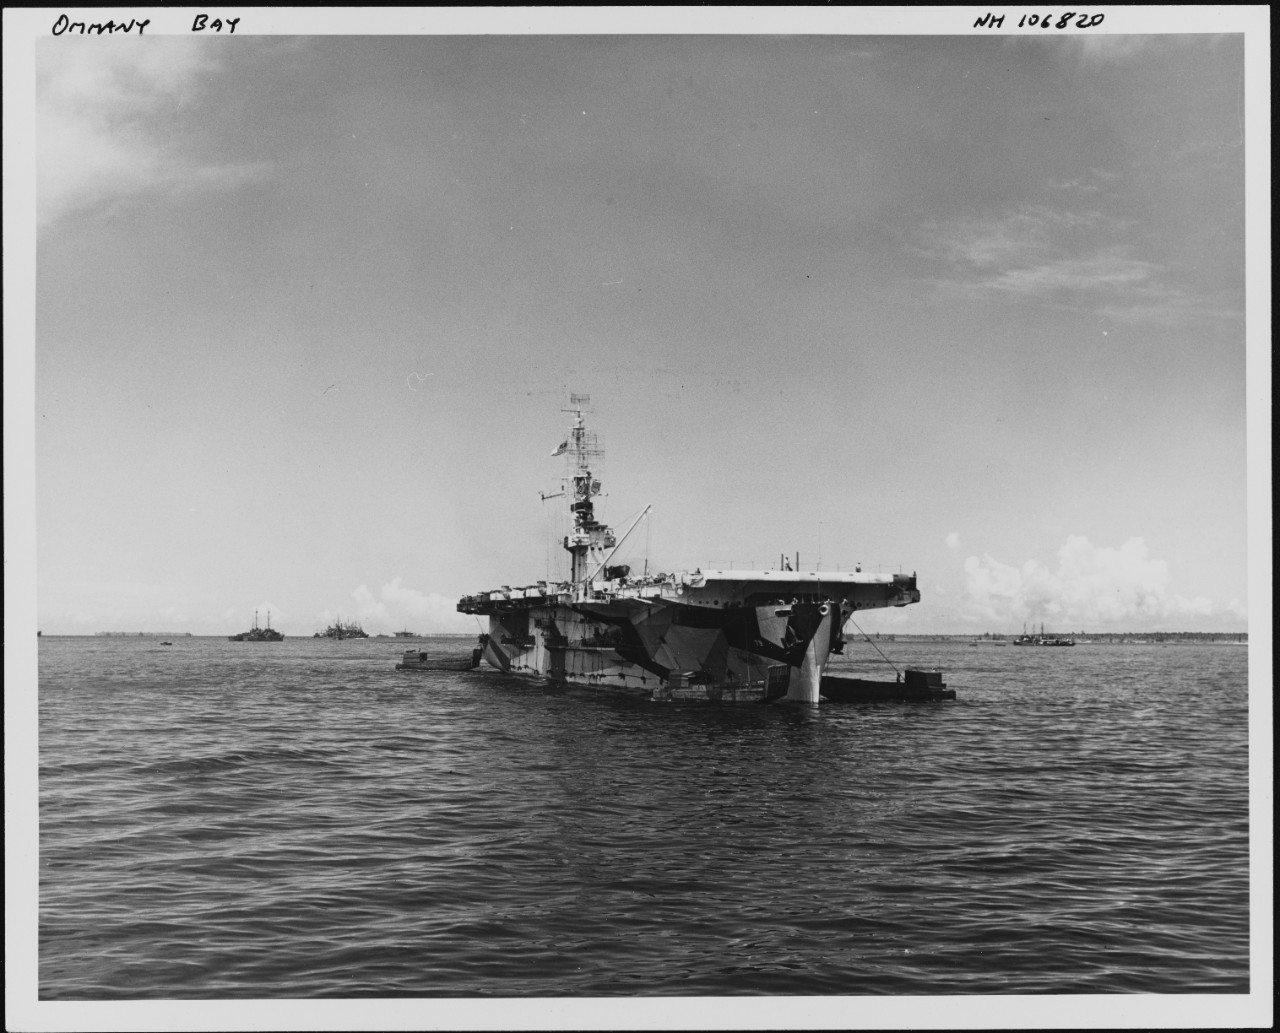 Photo # NH 106820  USS Ommaney Bay